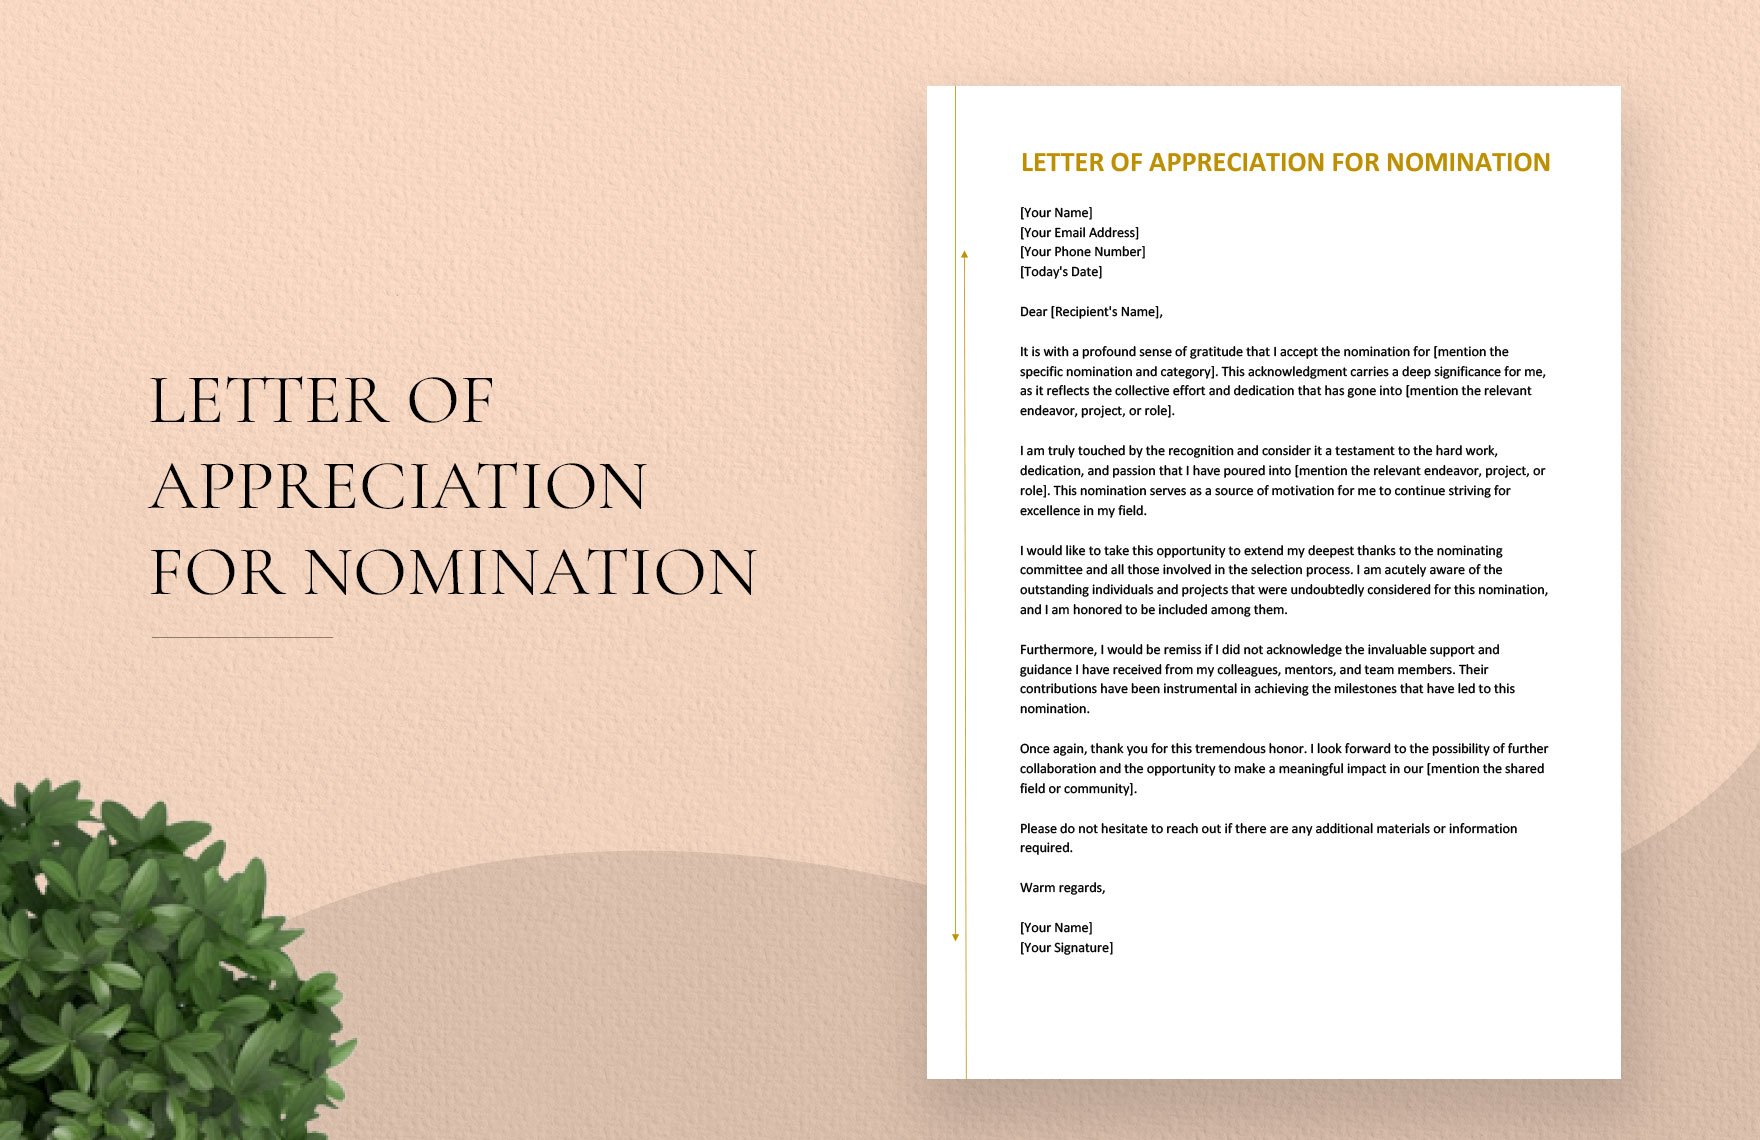 Letter of Appreciation for Nomination